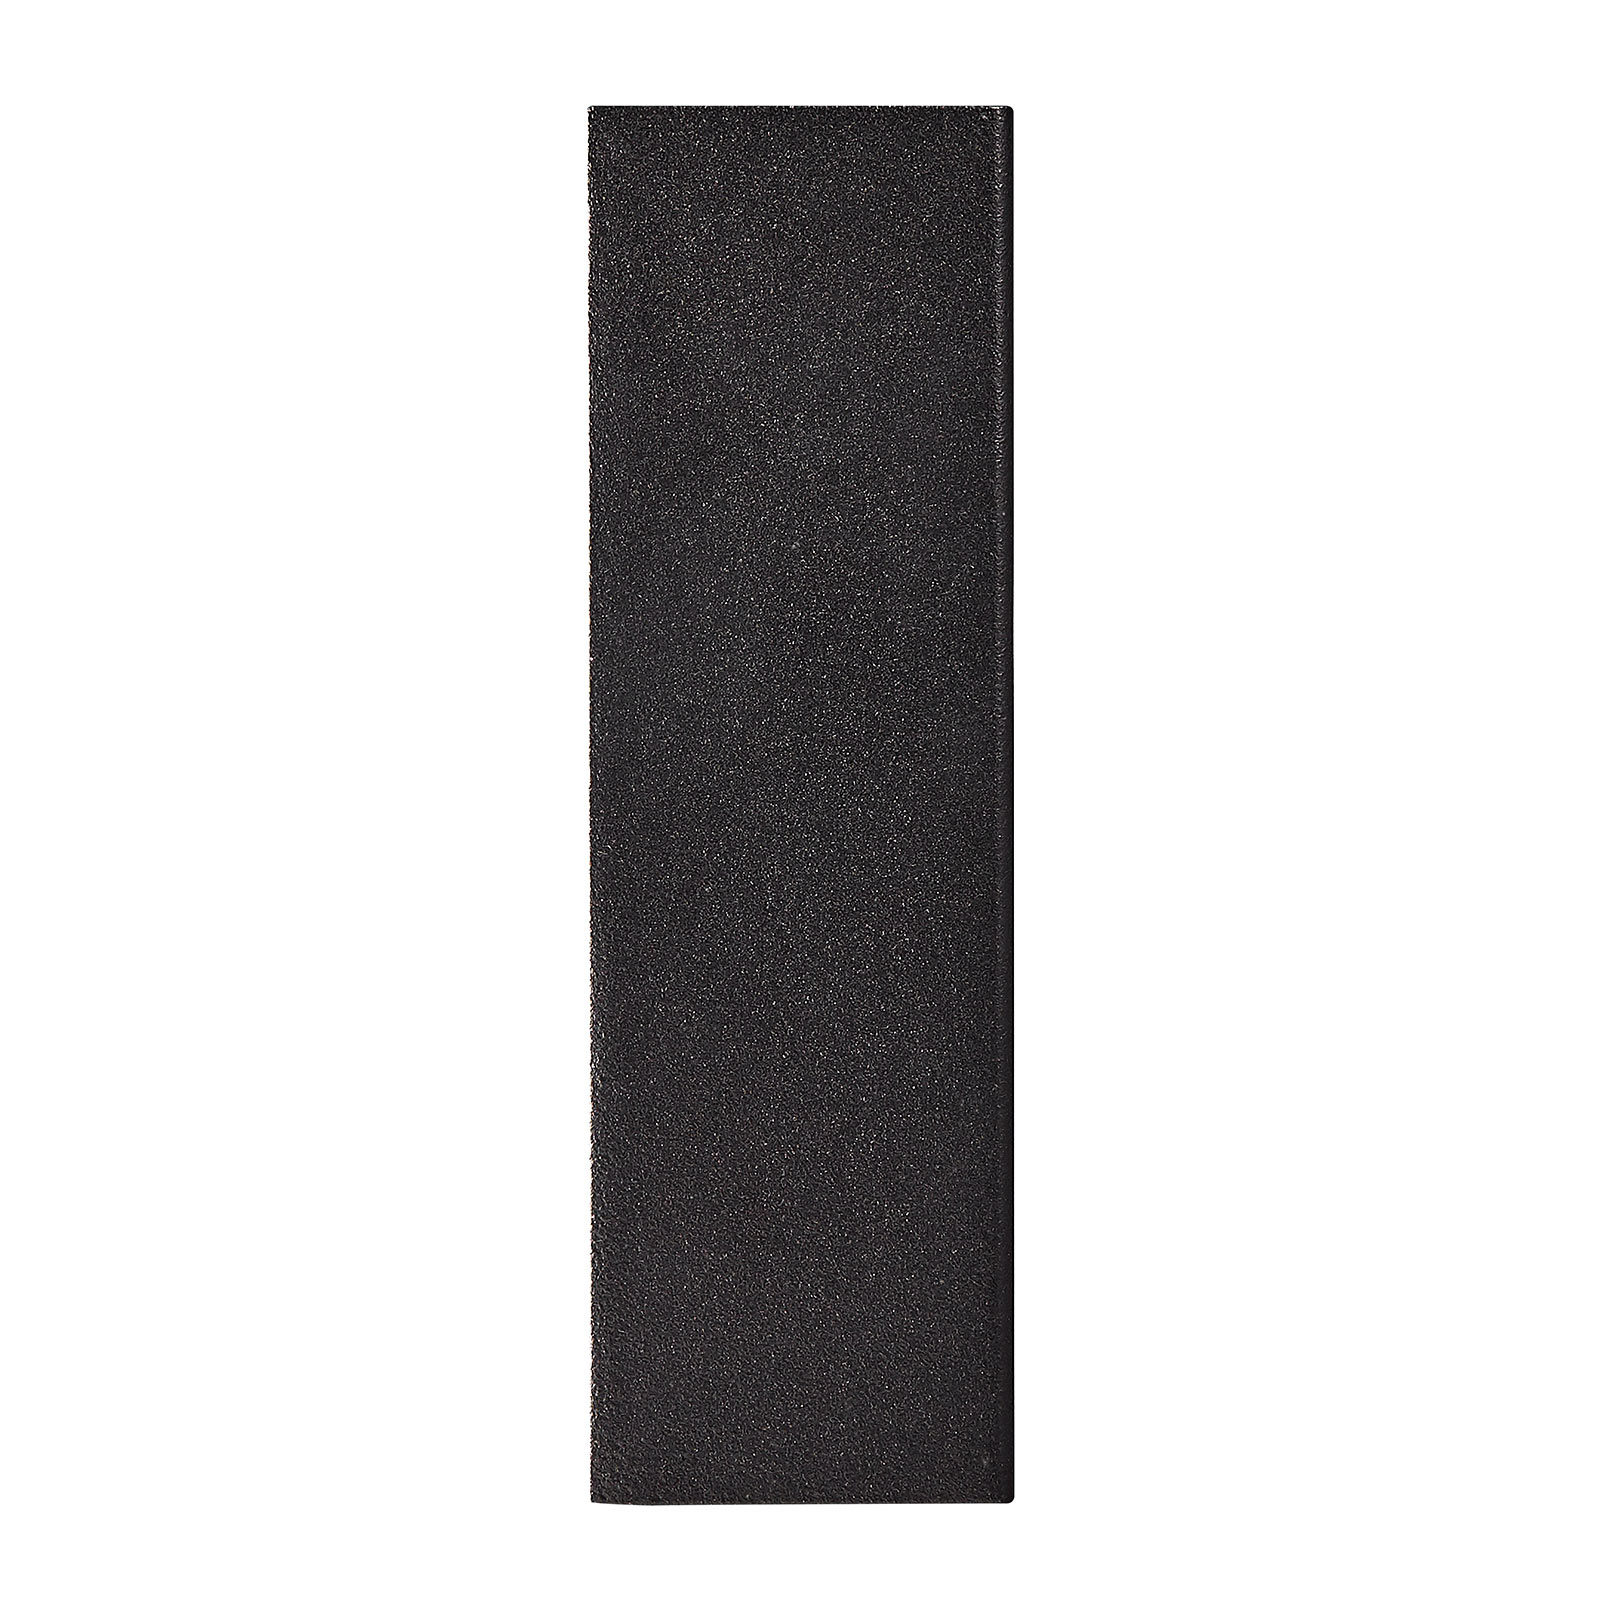 LED-utomhusvägglampa Fold 10 x 15 cm, svart